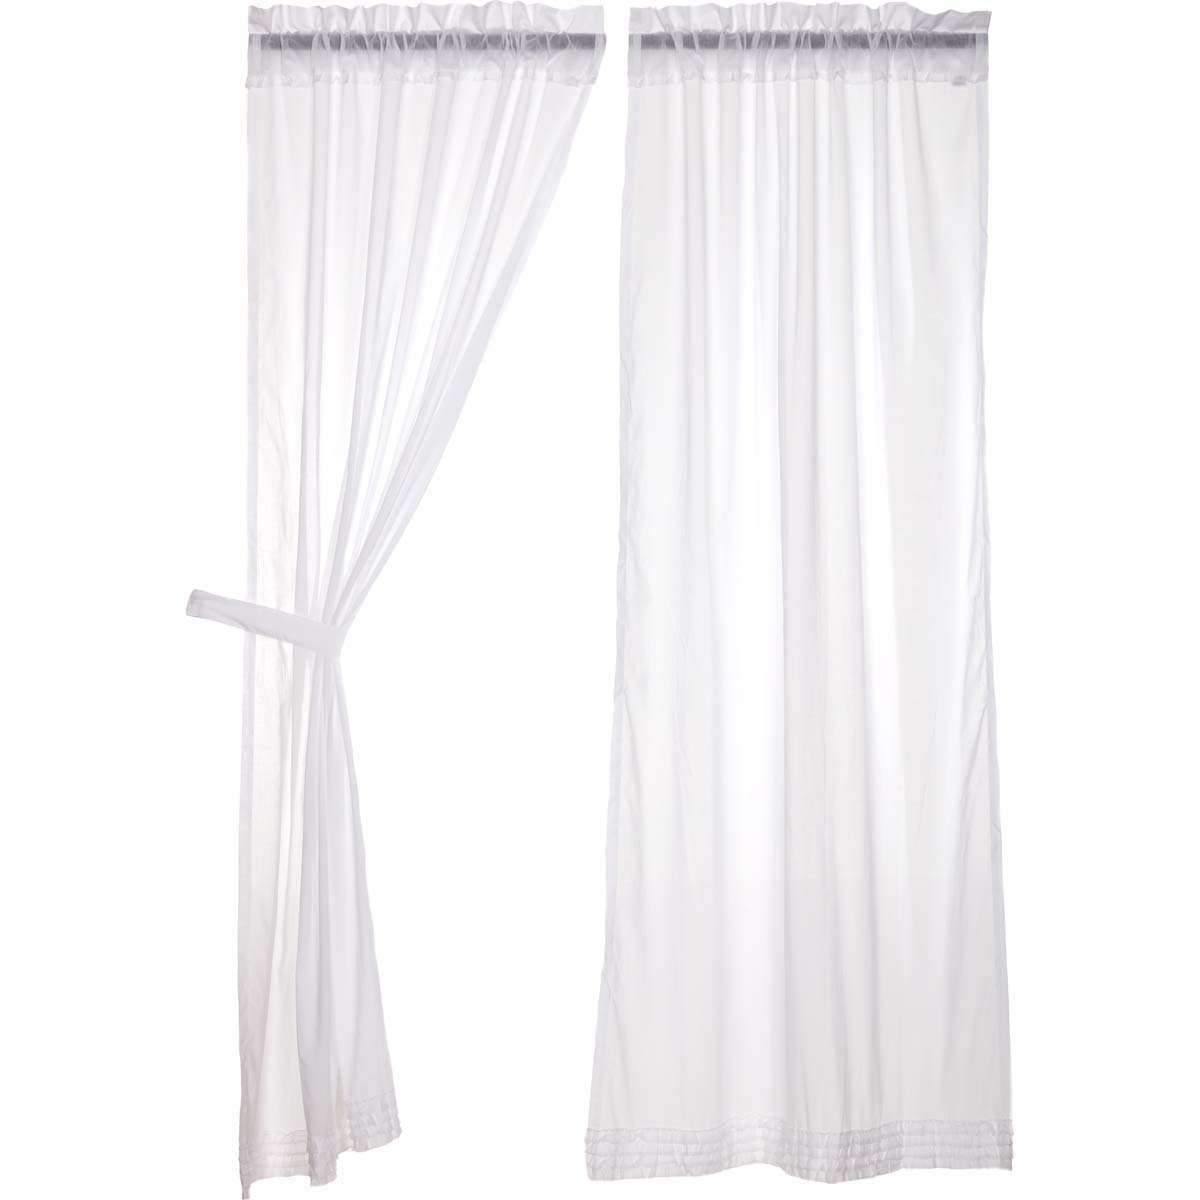 White Ruffled Sheer Panel Curtain Curtain Set of 2 84x40 - The Fox Decor